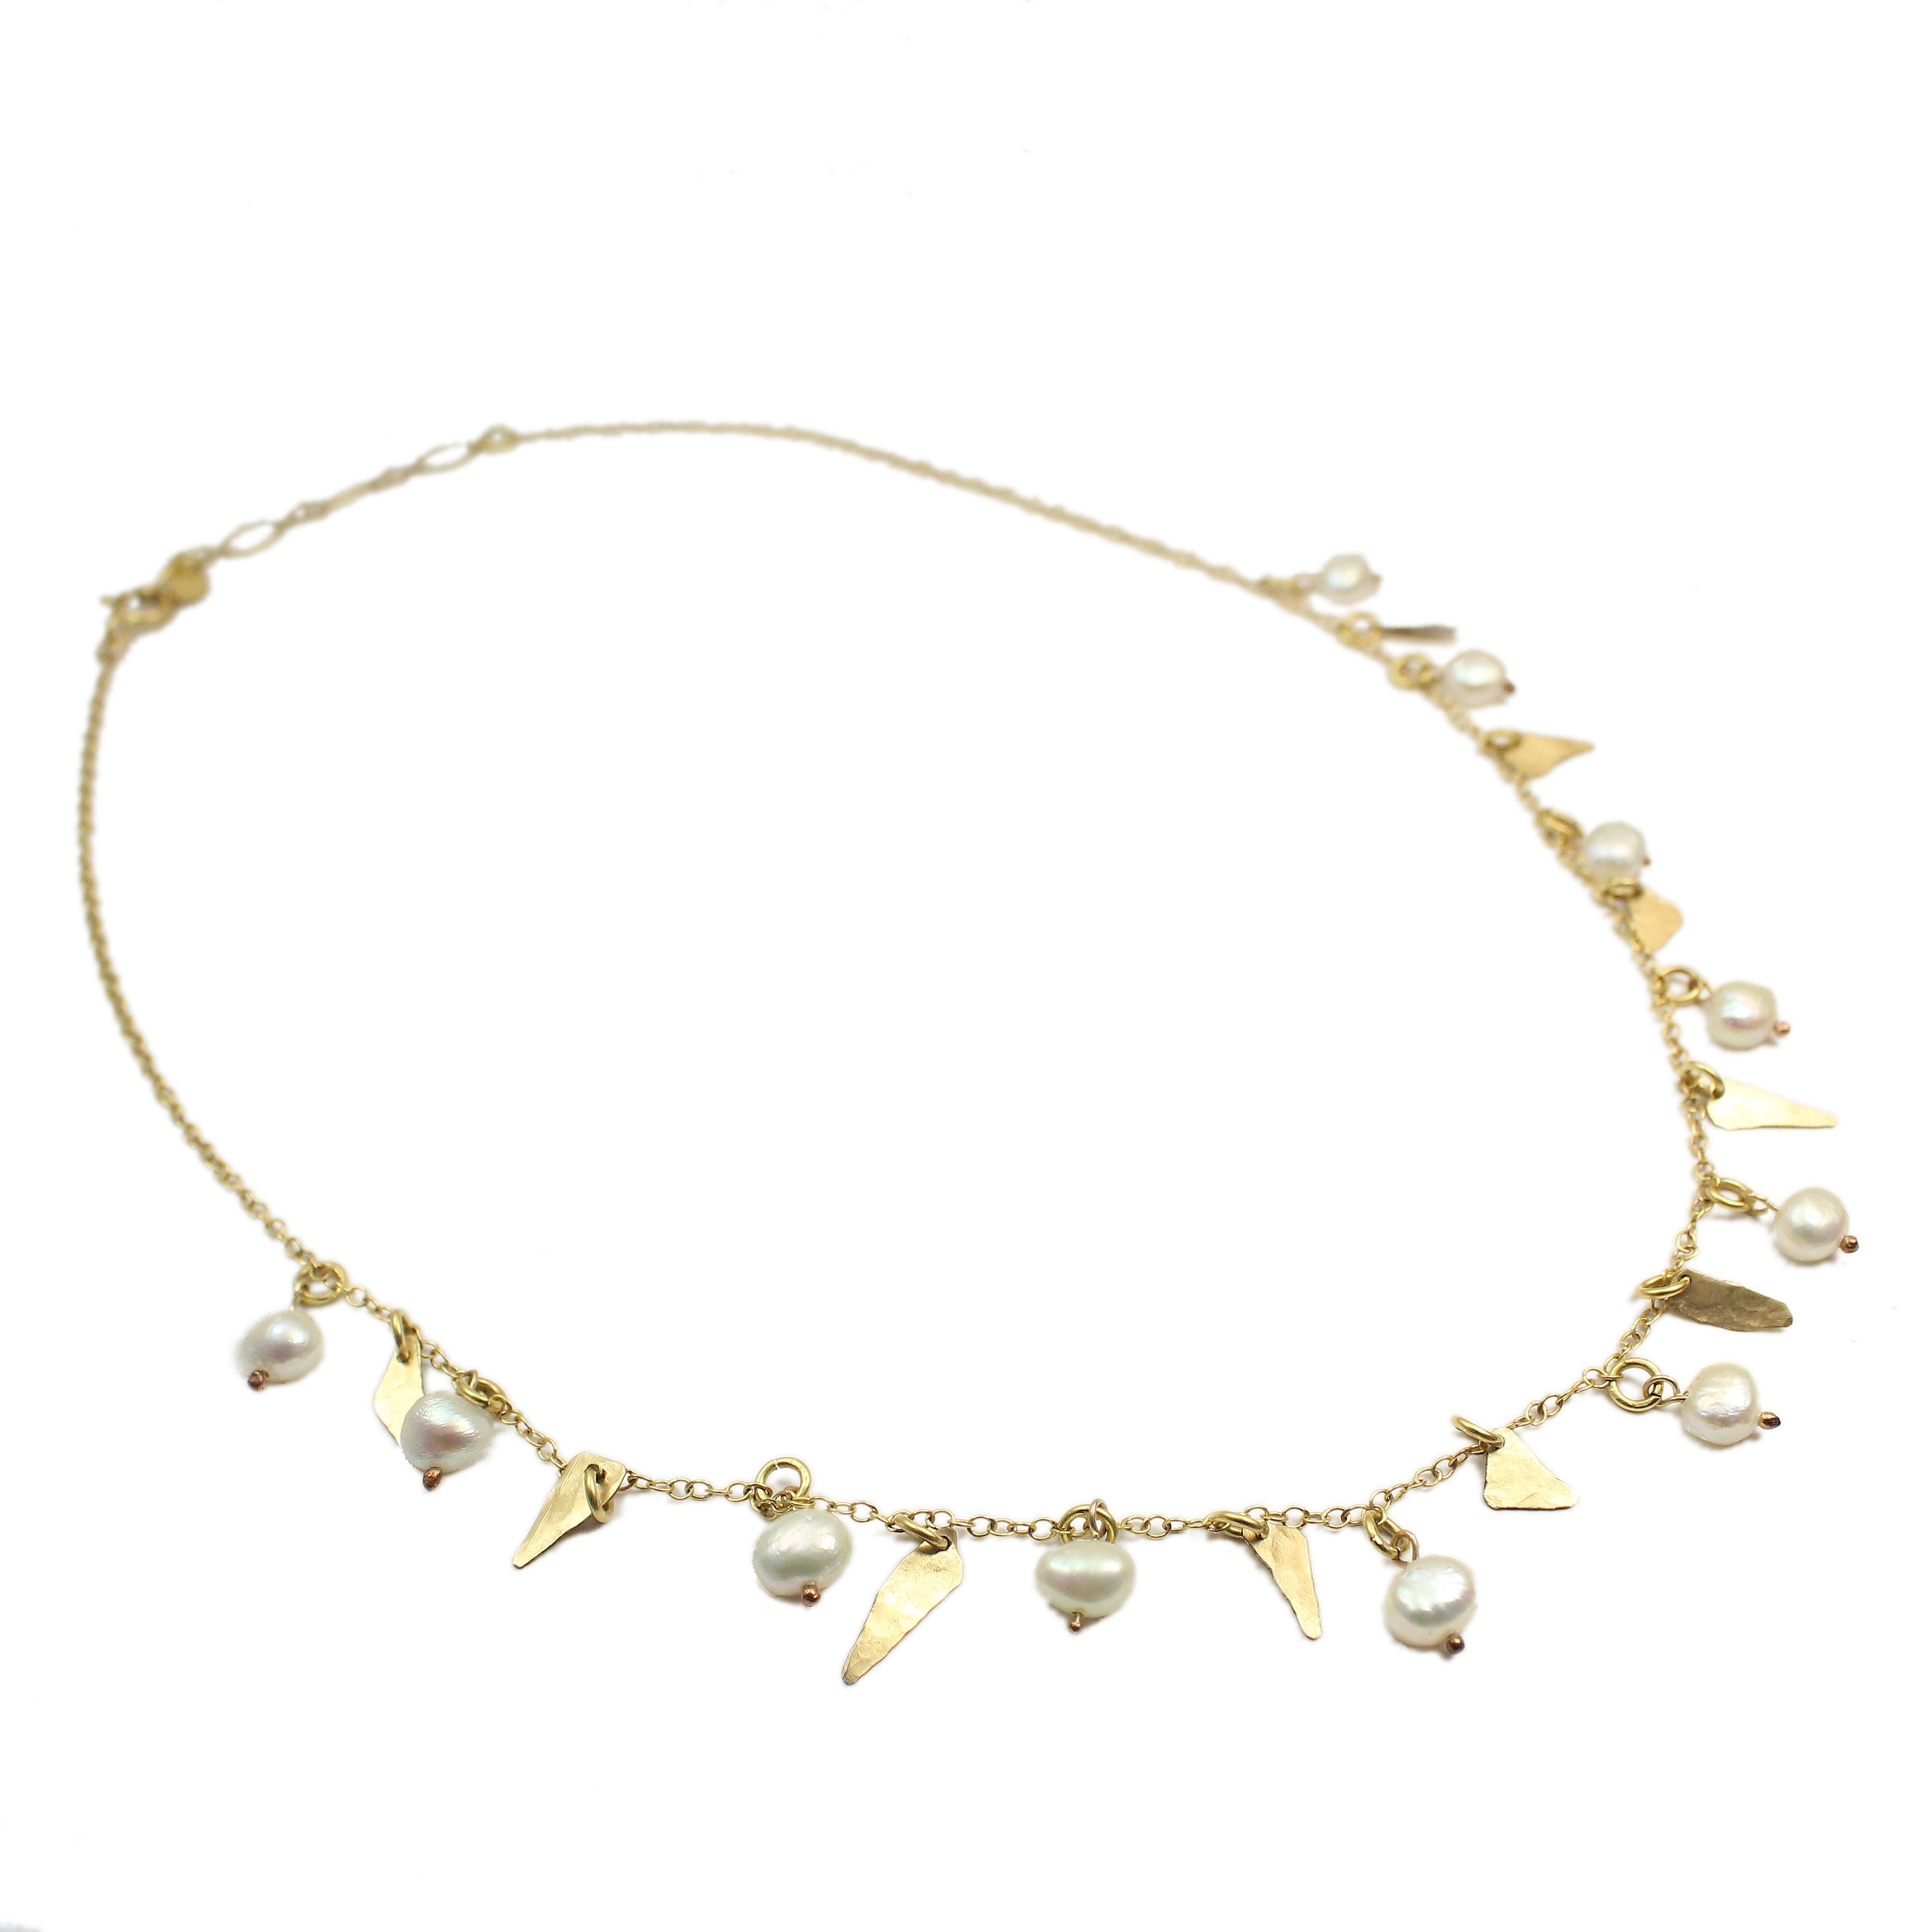 Gold filled Leaves & White Pearls Elegant Necklace - Shulamit Kanter